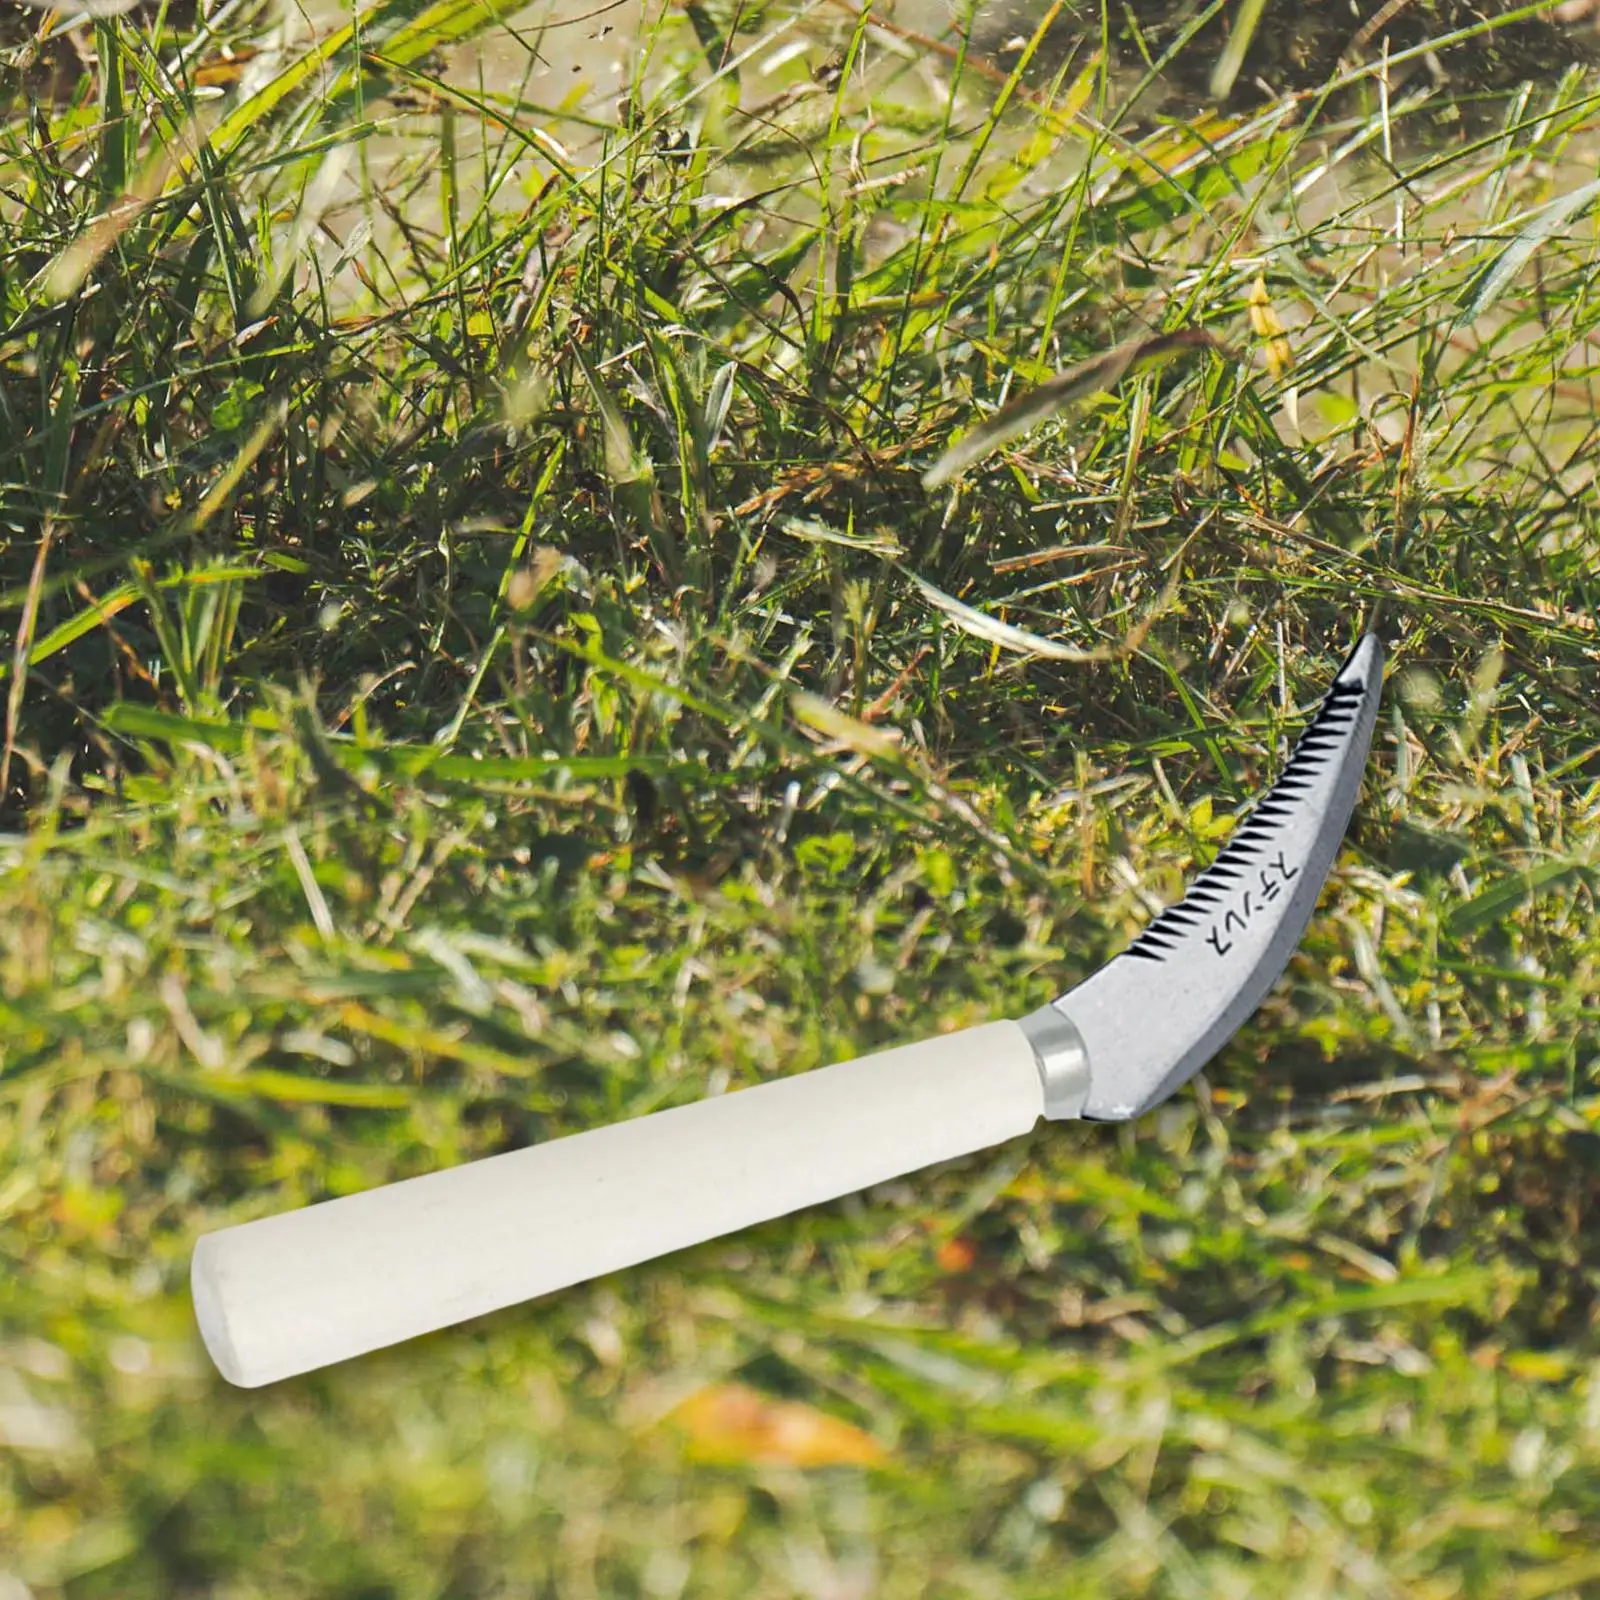 Grass Weeding Knife Small Weeding Tool Lightweight Manual Weeder Grass Cutter Knife for Terrace Paving Garden Lawn Yard